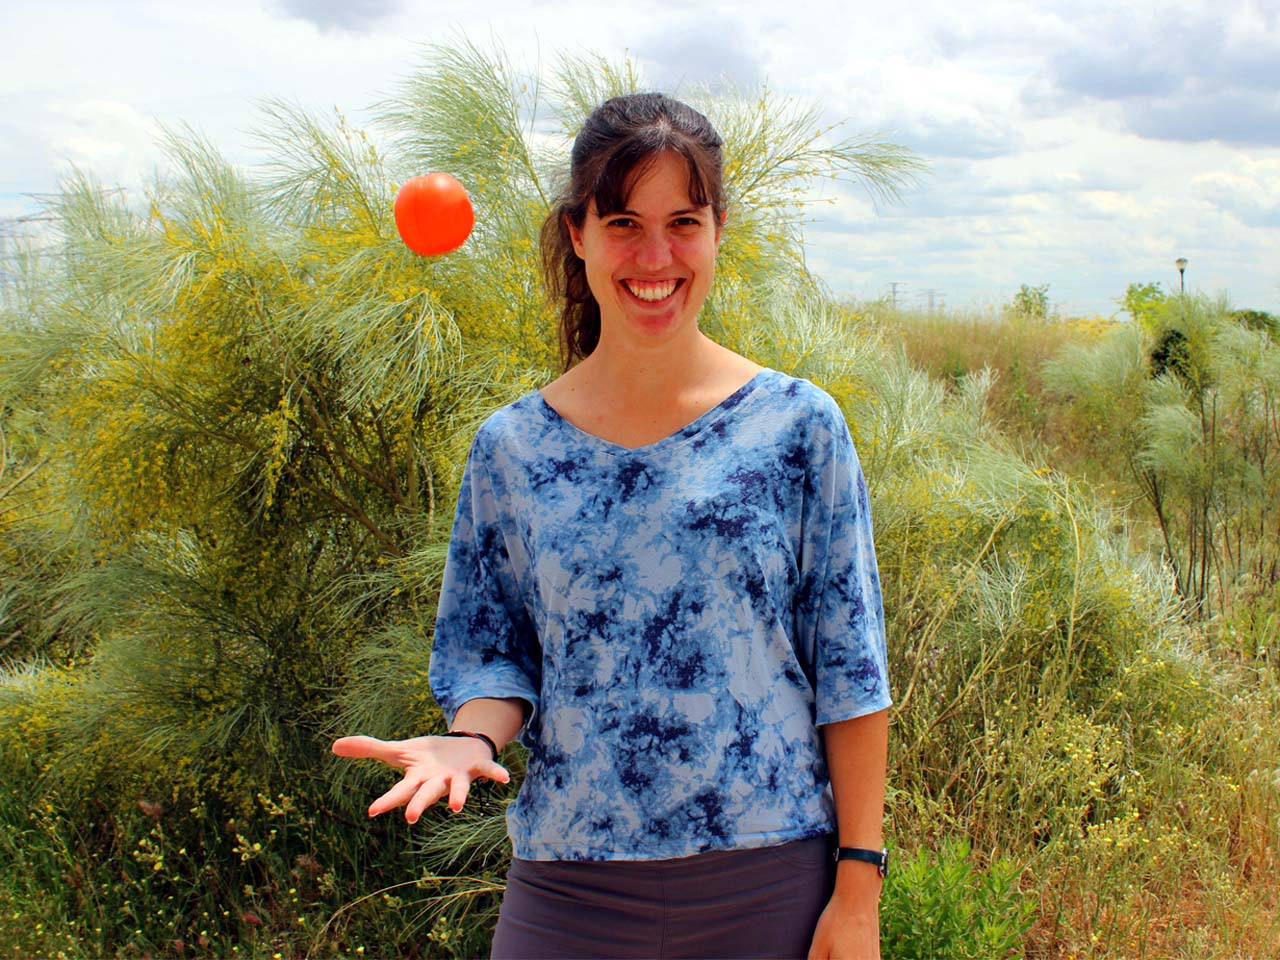 Irene Valenzuela tira al aire una pelota de plástico naranja. / IFT UAM-CSIC